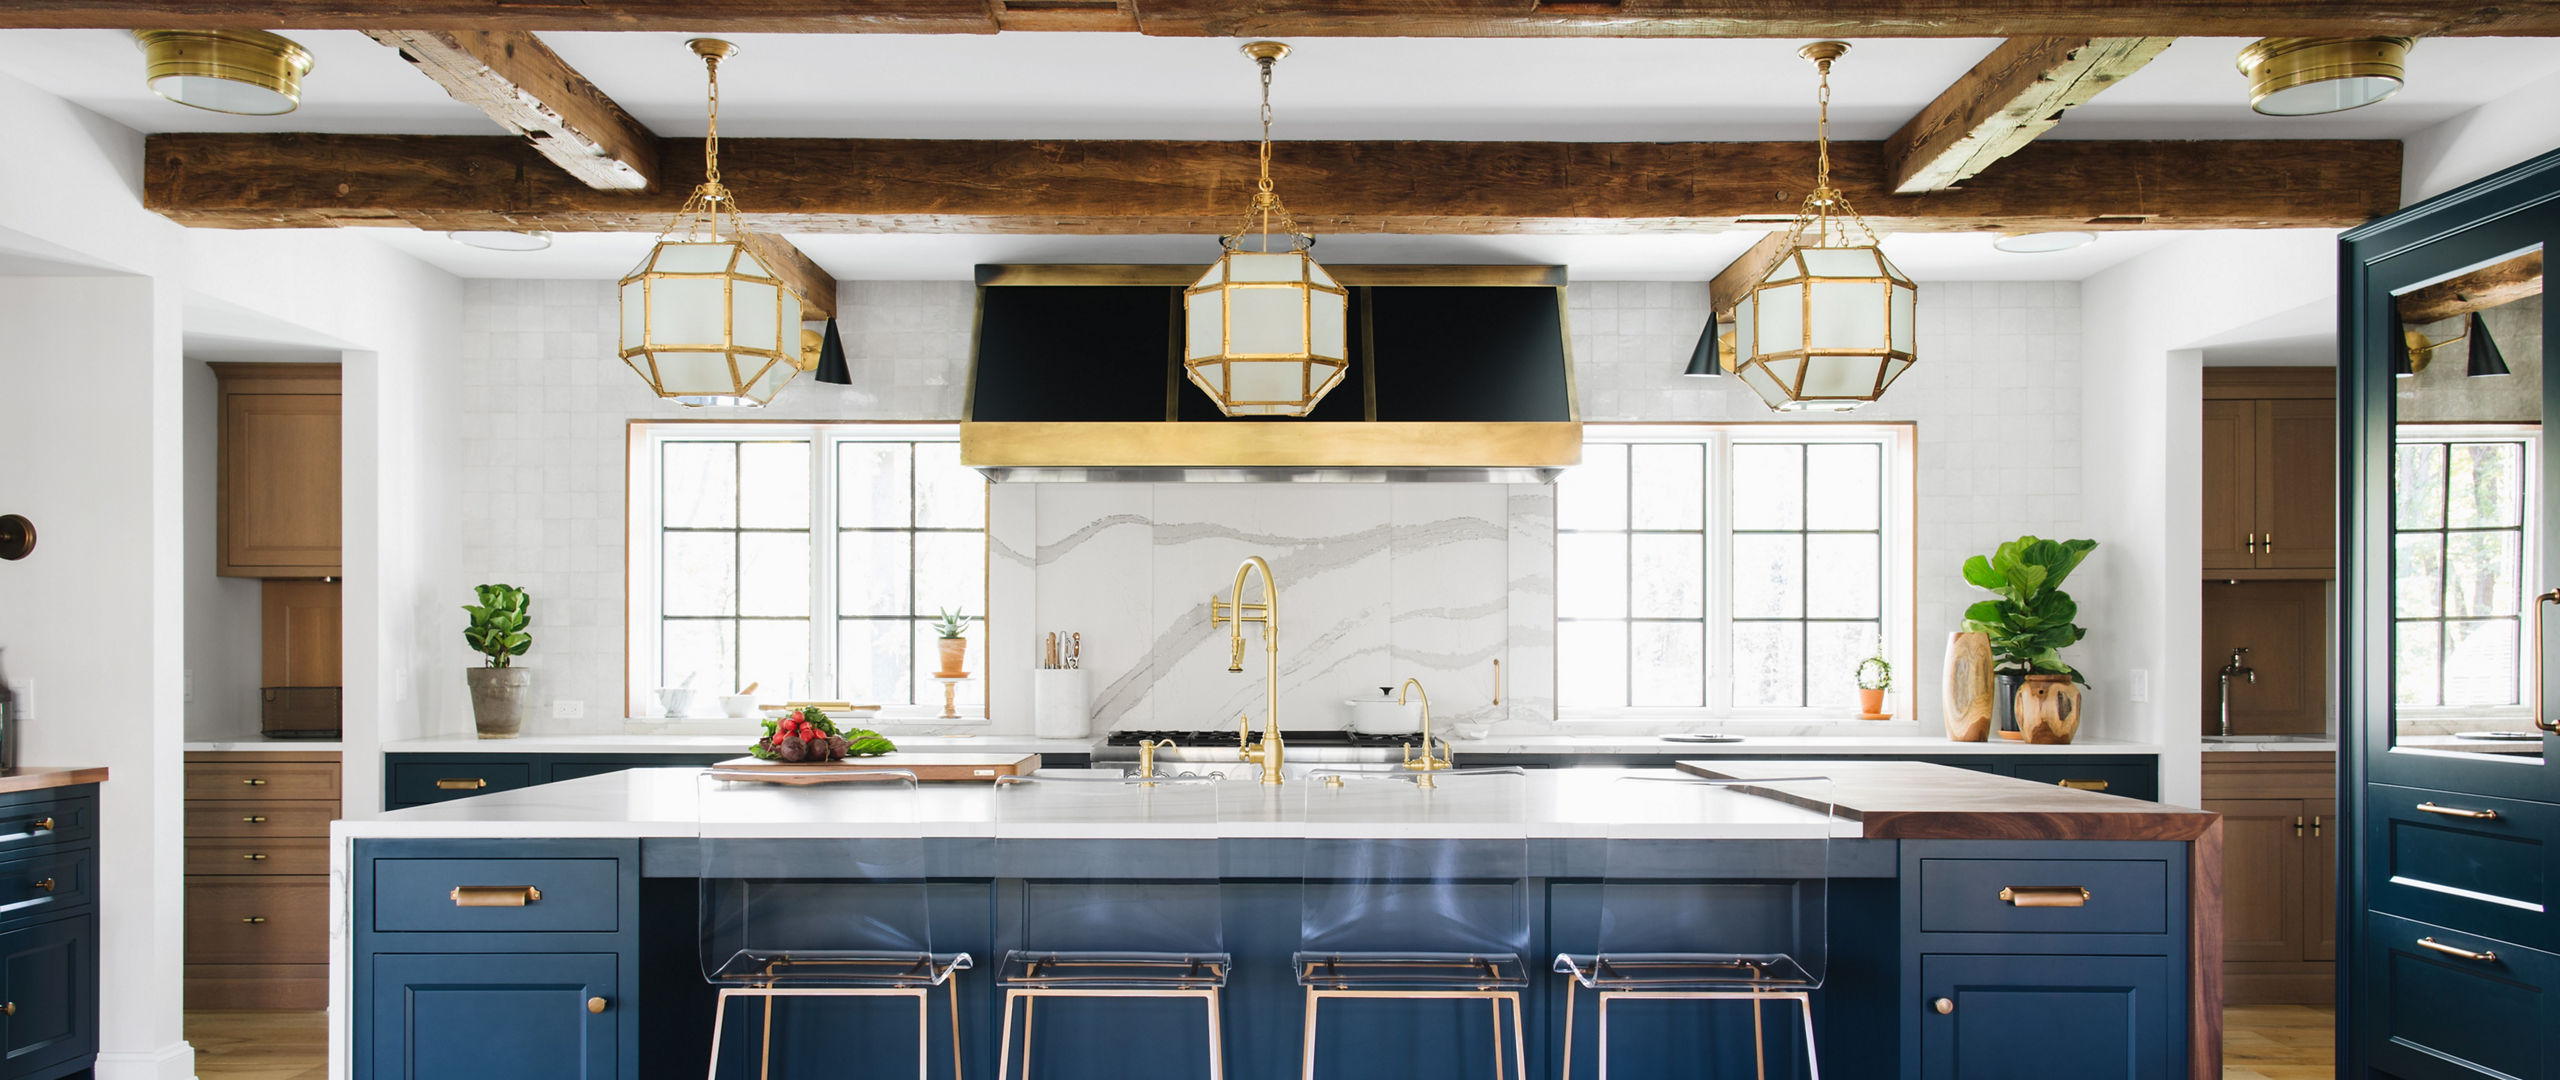 Blue Kitchen Ideas for a Dream Kitchen—Navy, Cobalt & More